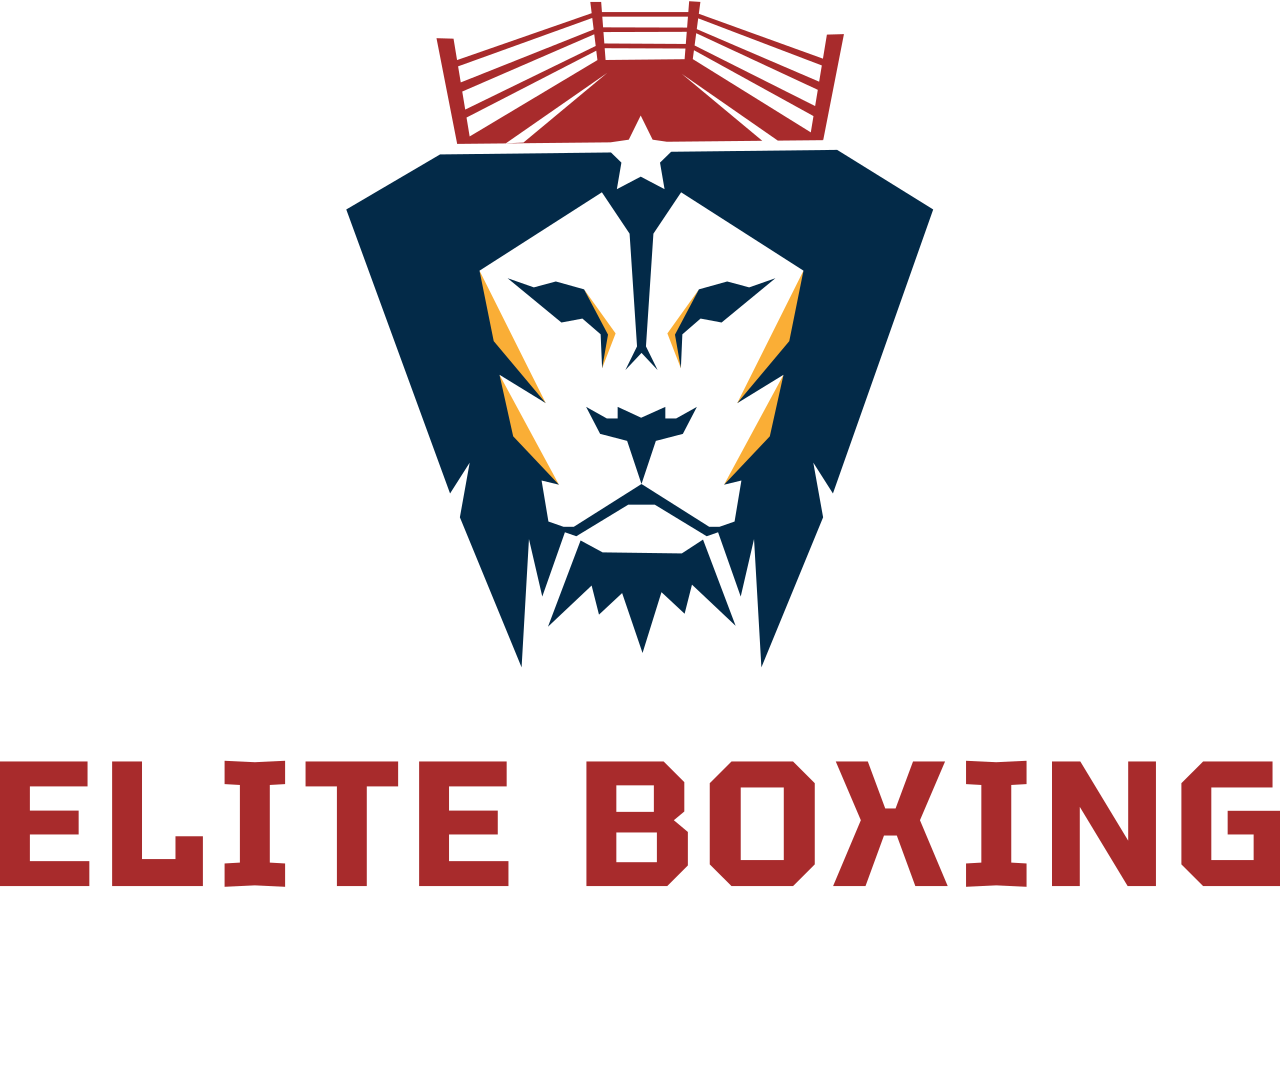 Elite Boxing's logo